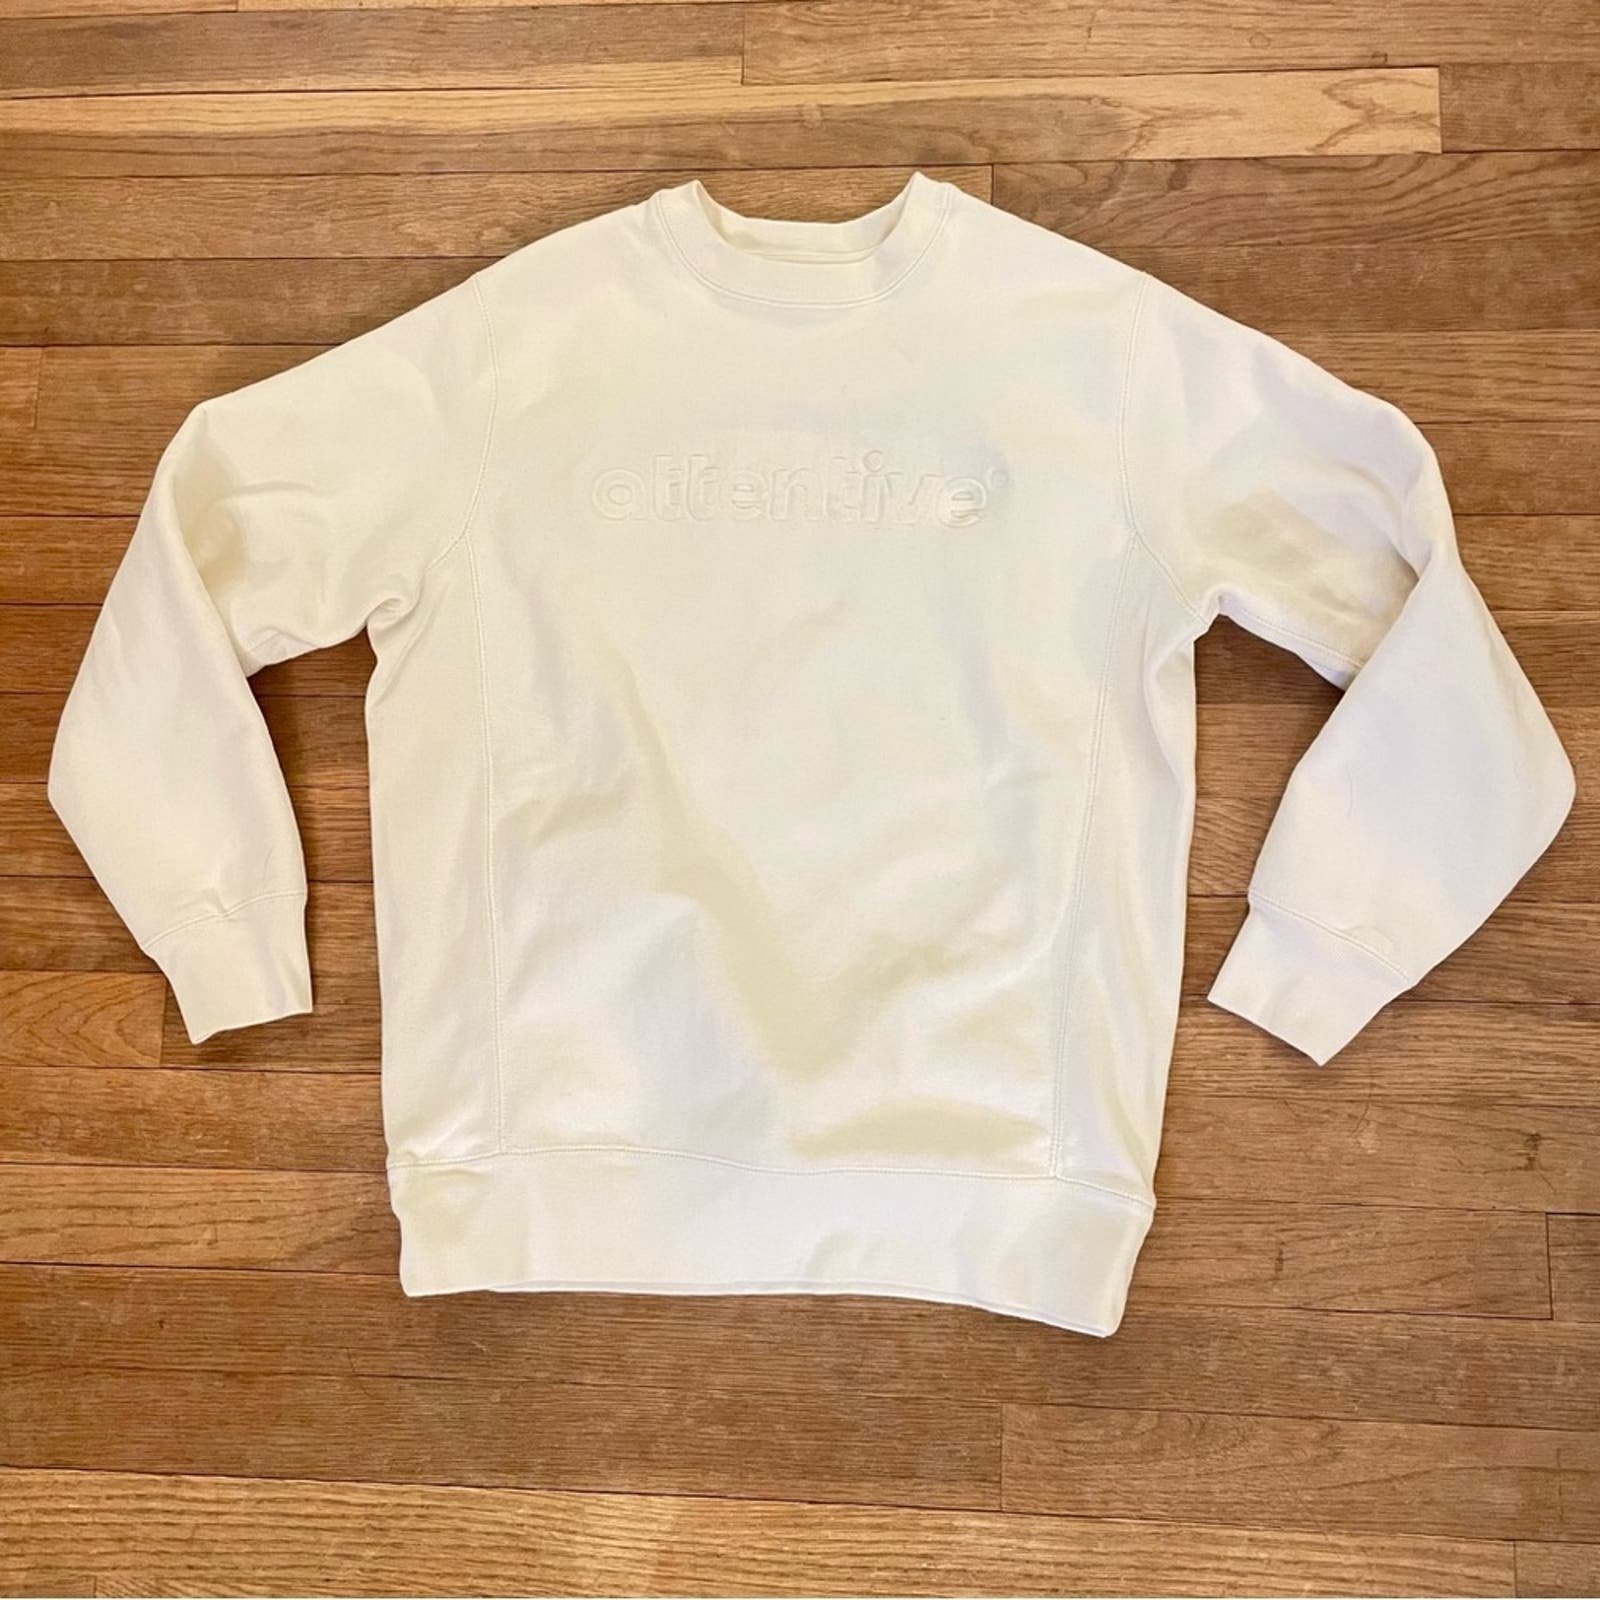 Fashion Alternative women´s white long sleeve sweatshirt shirt top size small S b3 kh5ojJkv1 hot sale